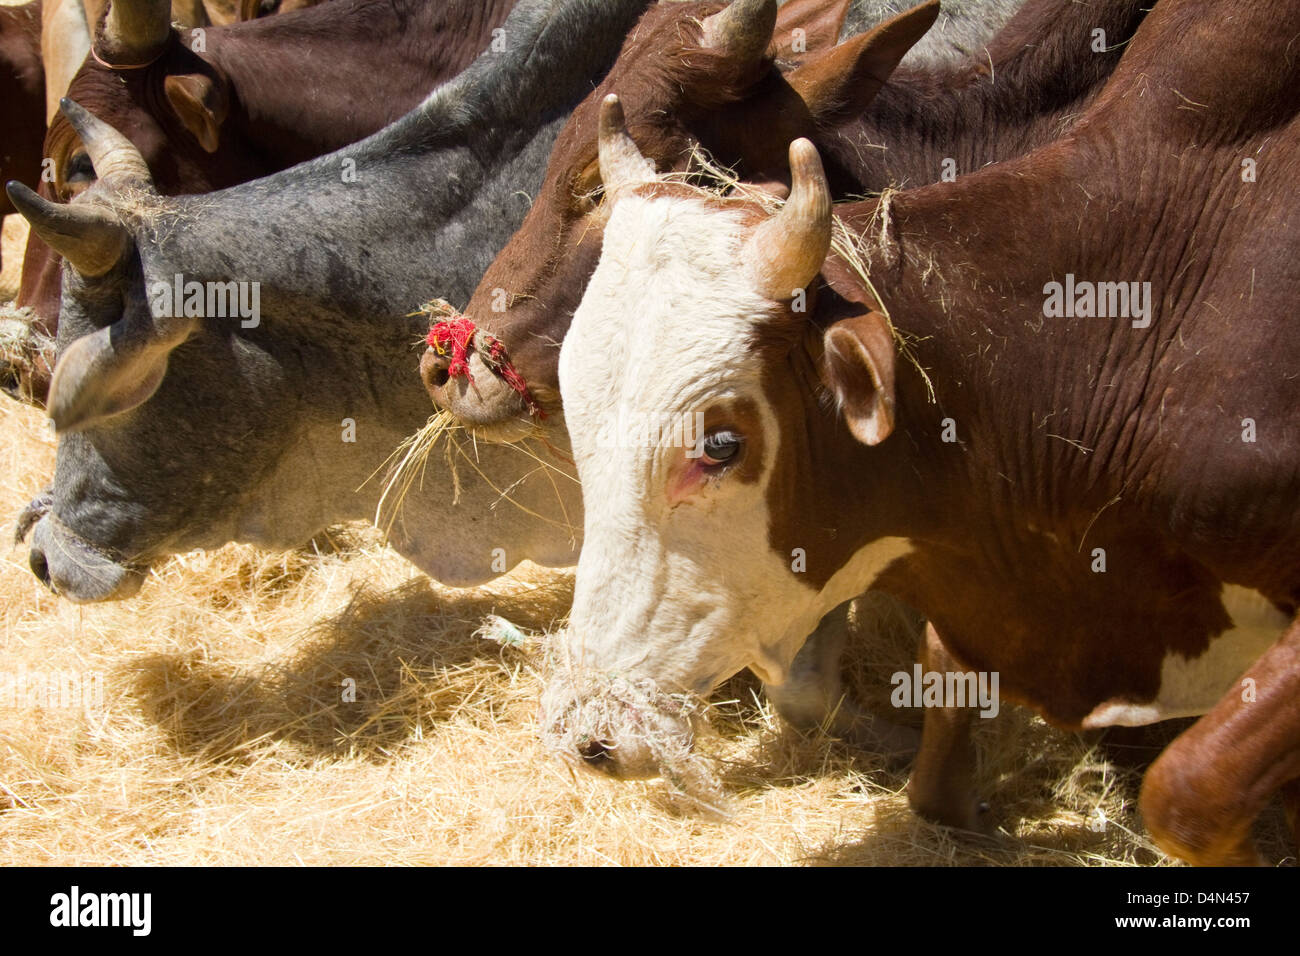 Thrashing with oxen, northern Ethiopia, Africa Stock Photo